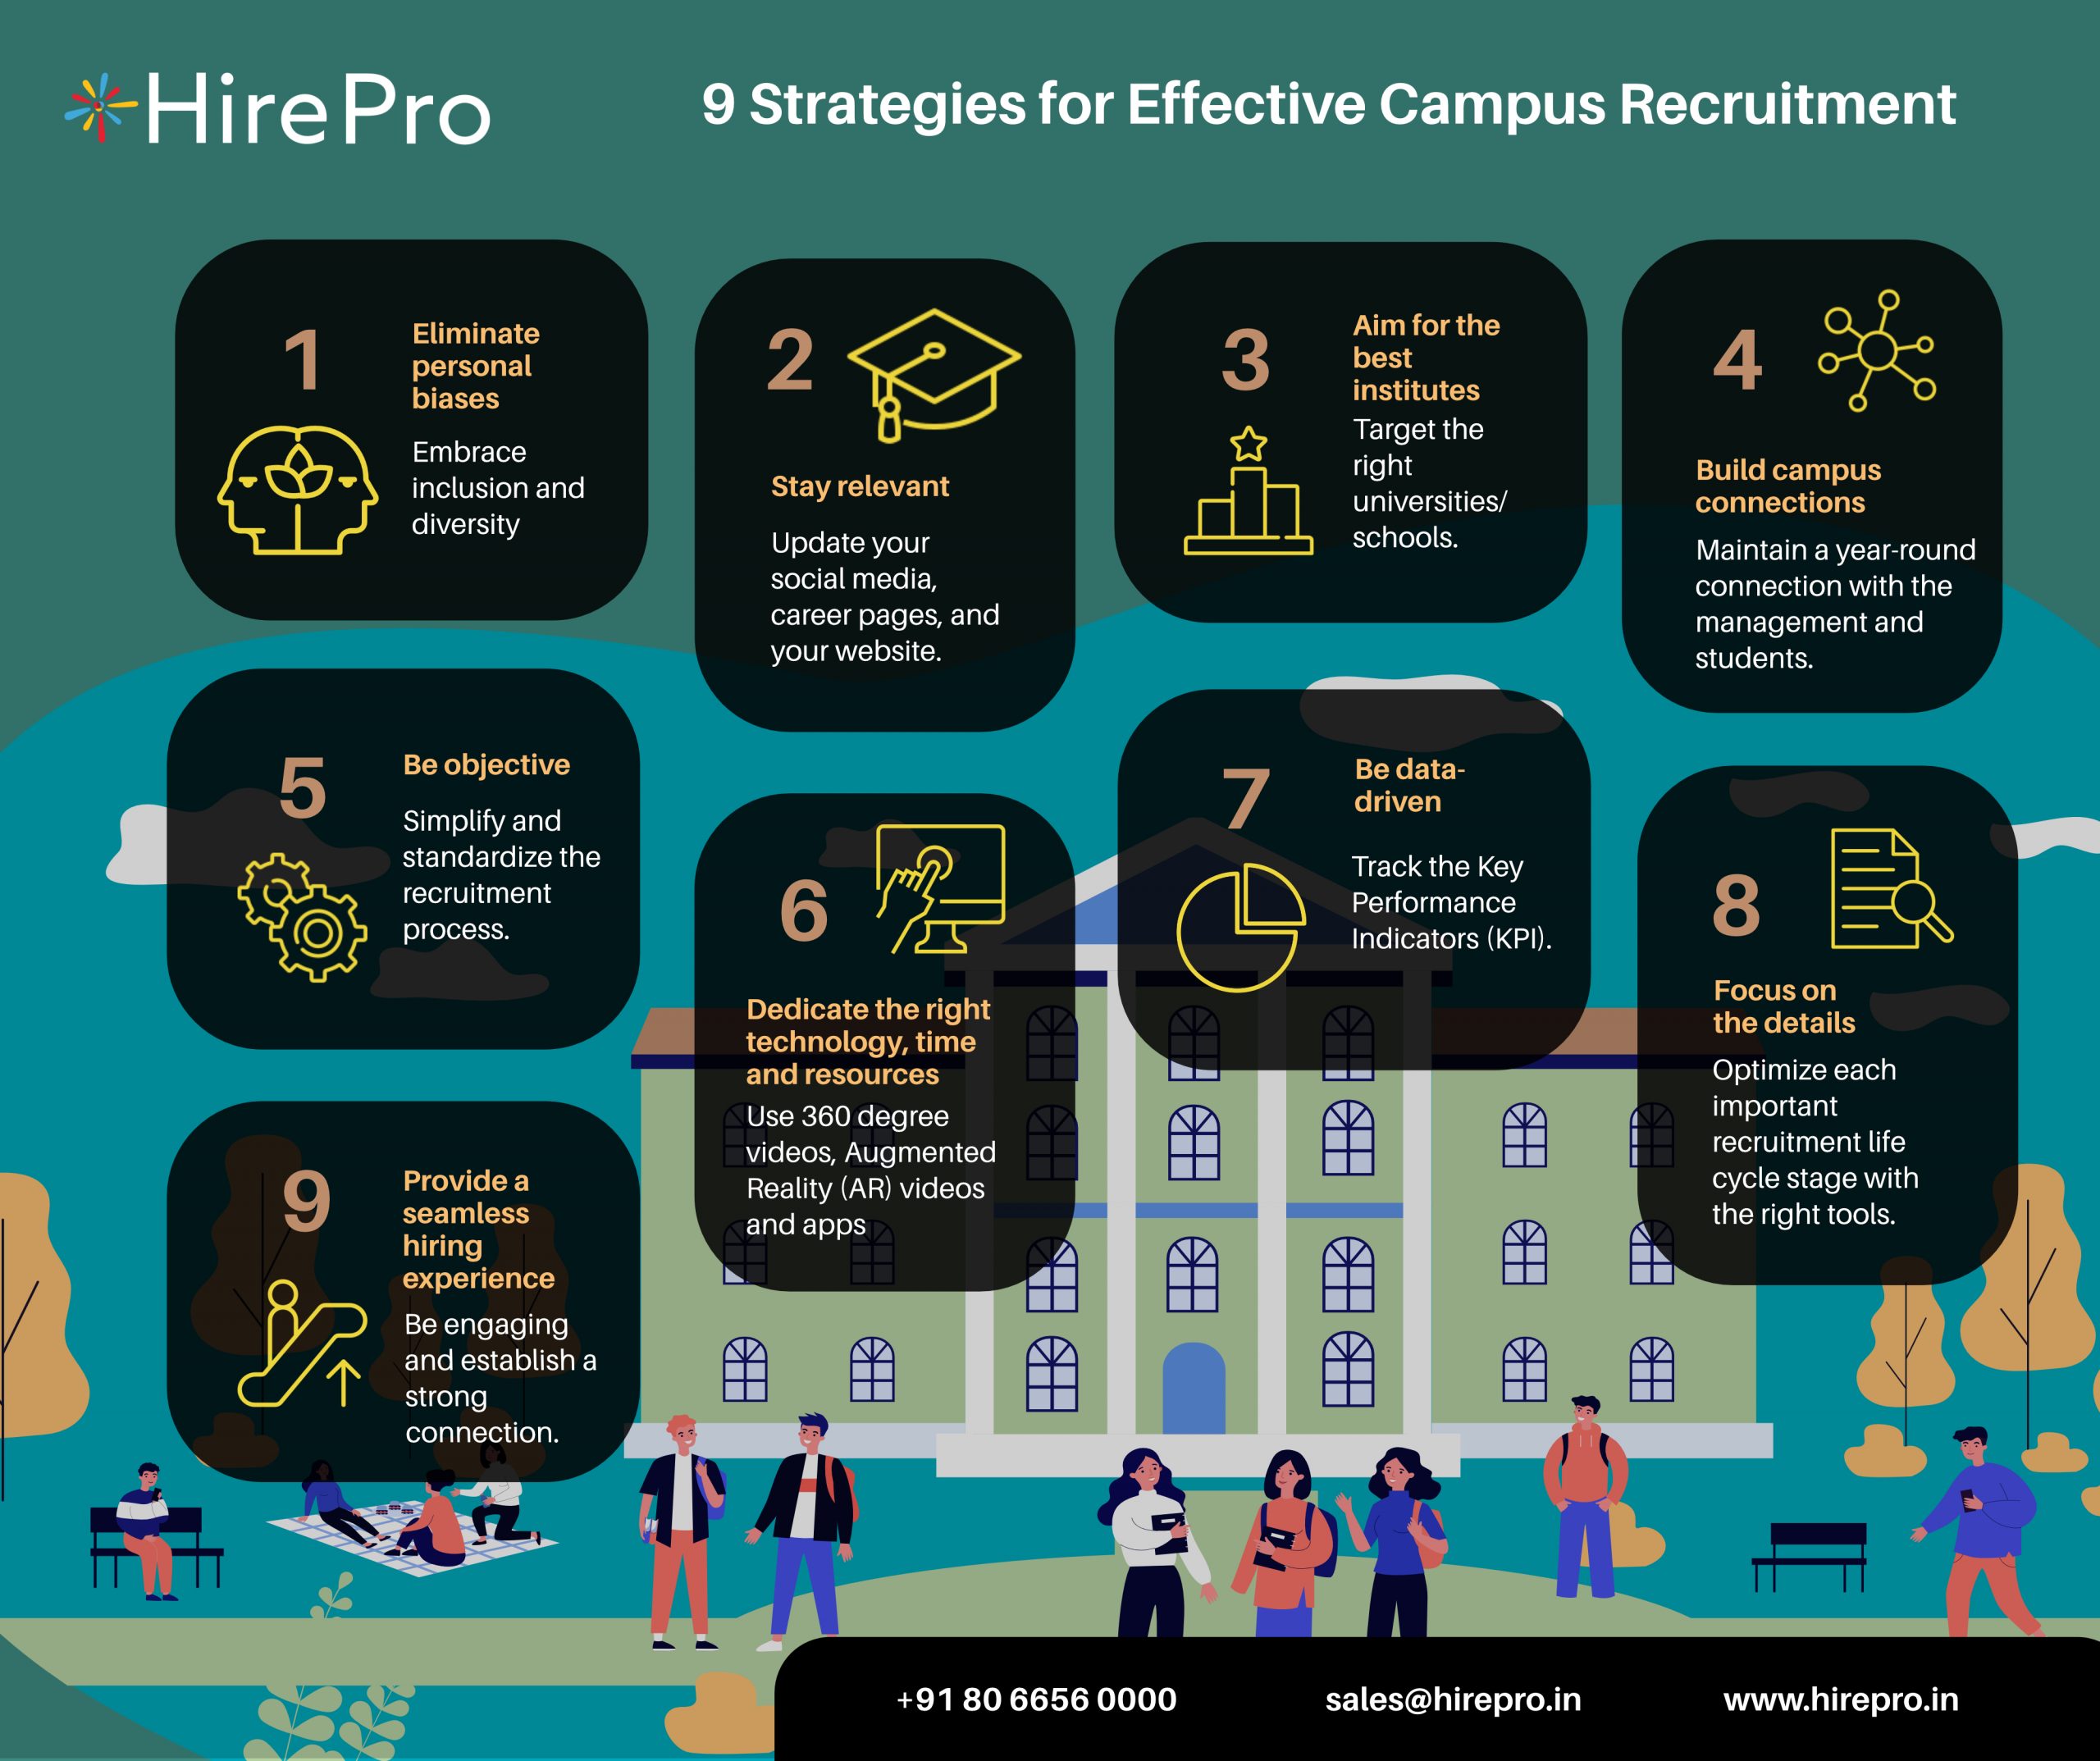 Strategies for effective campus recruitment